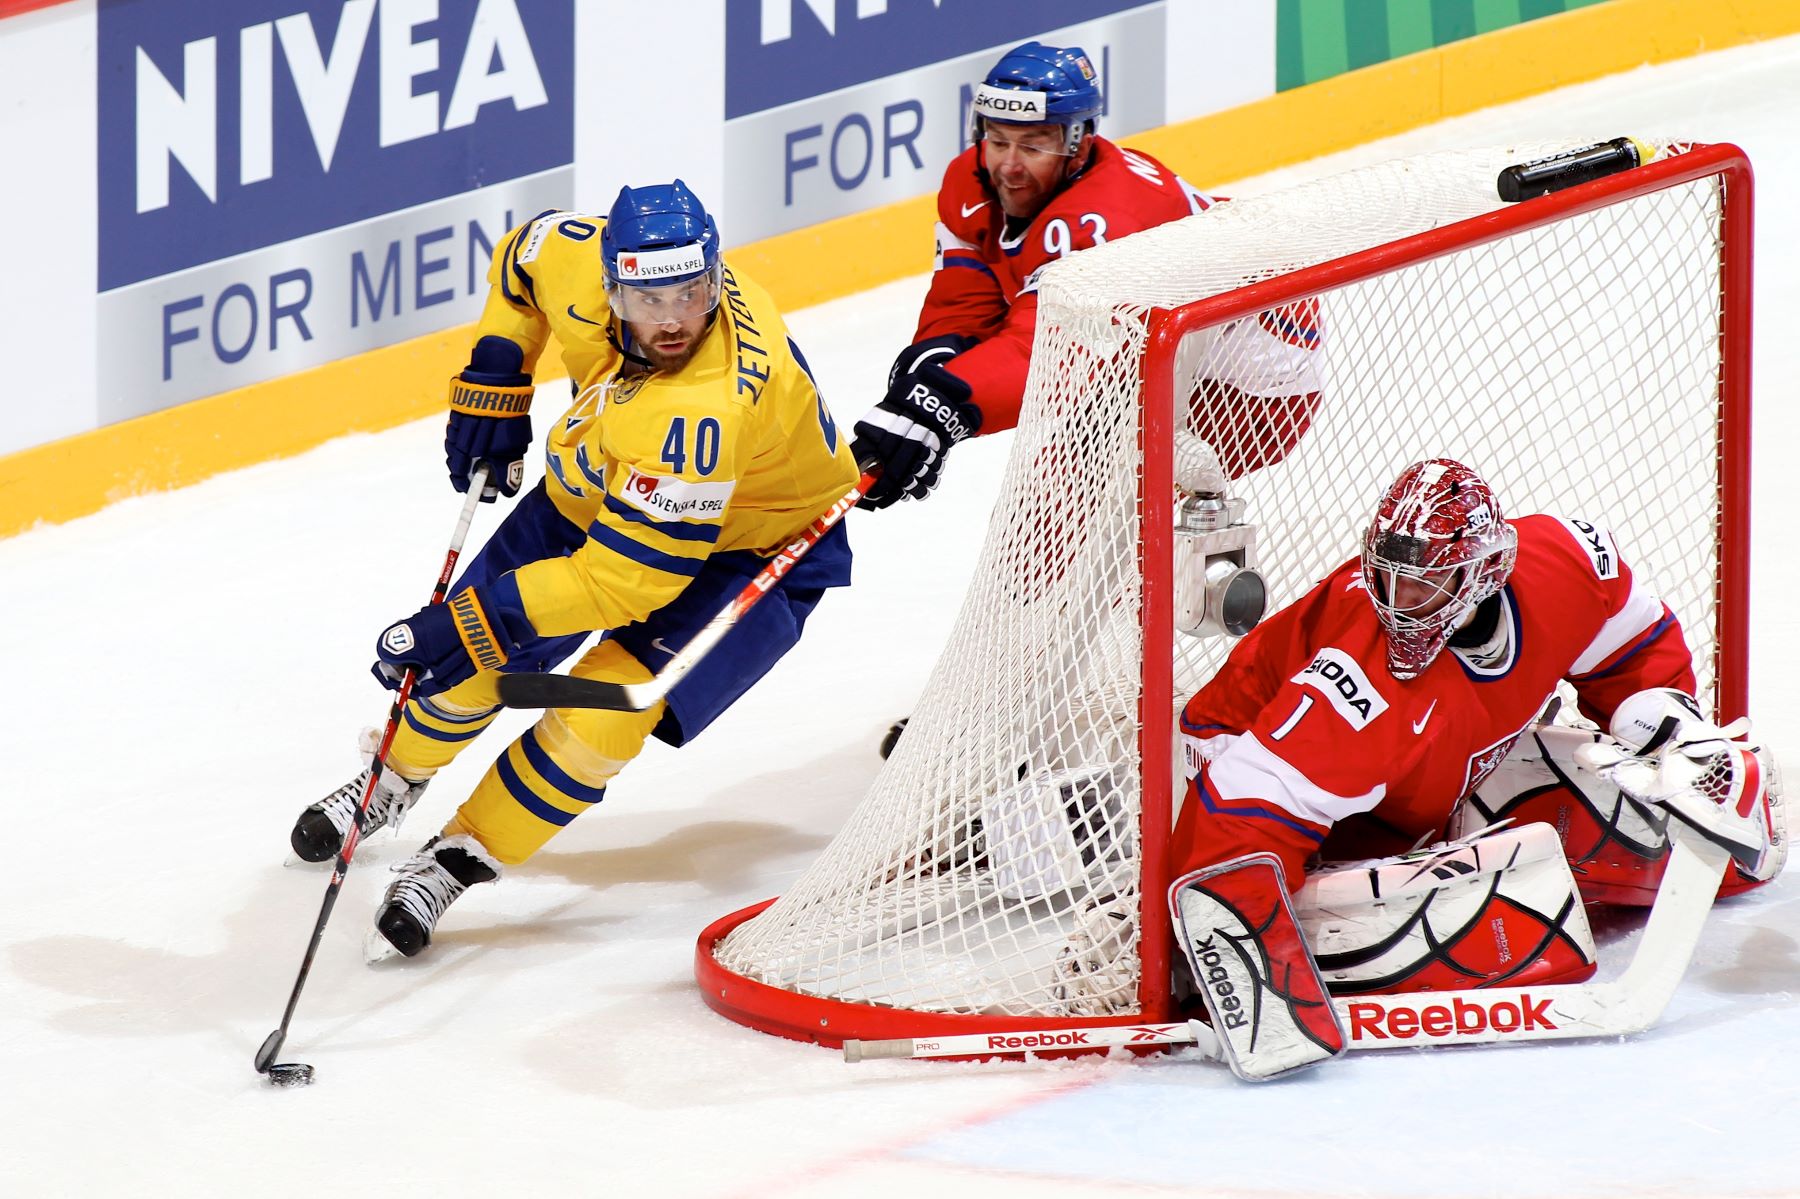 GM: Henrik Zetterberg done playing professional hockey